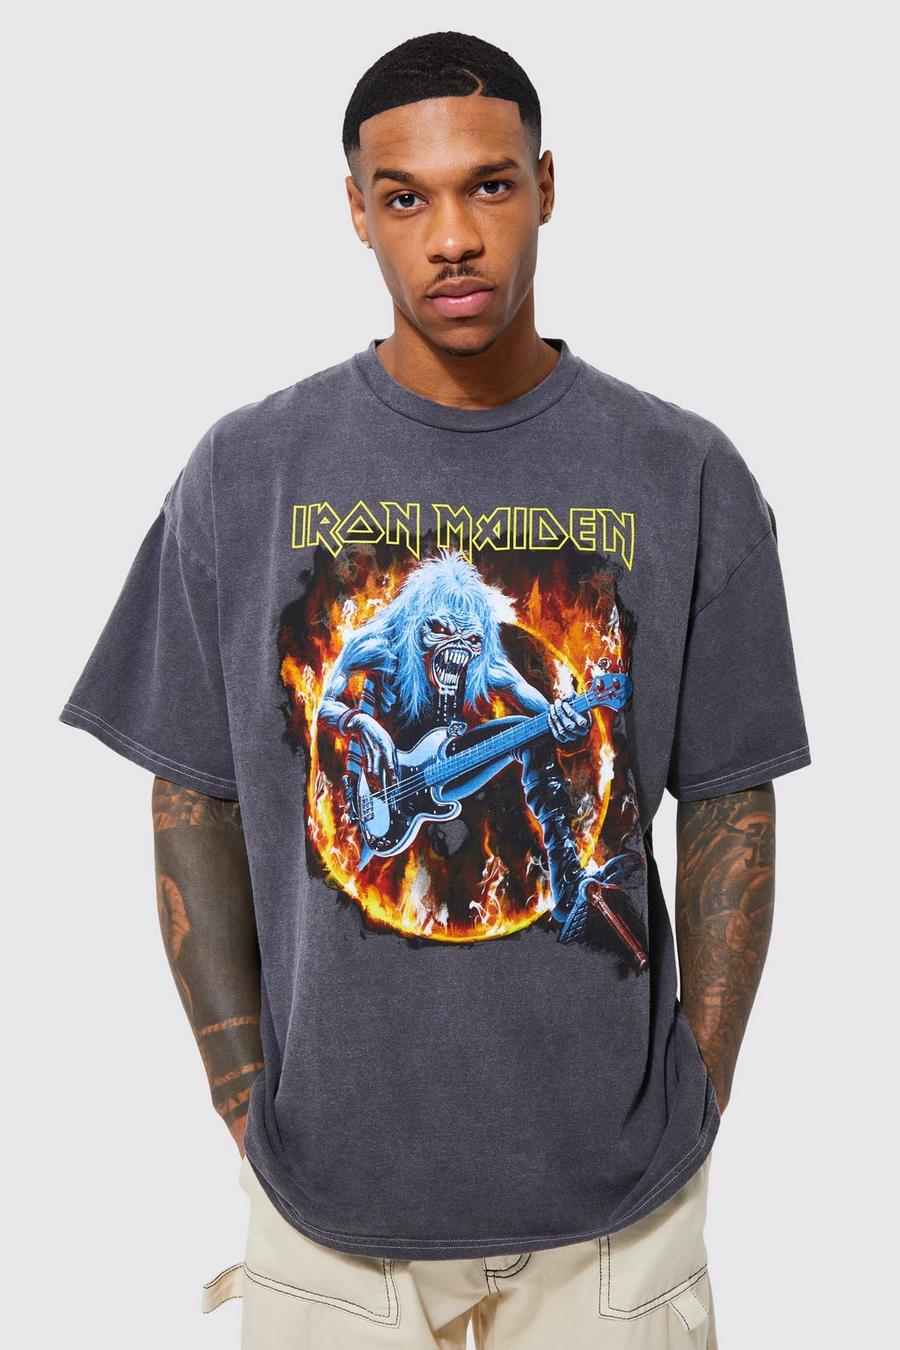 Charcoal grey Oversized Iron Maiden Overdye License T-shirt 